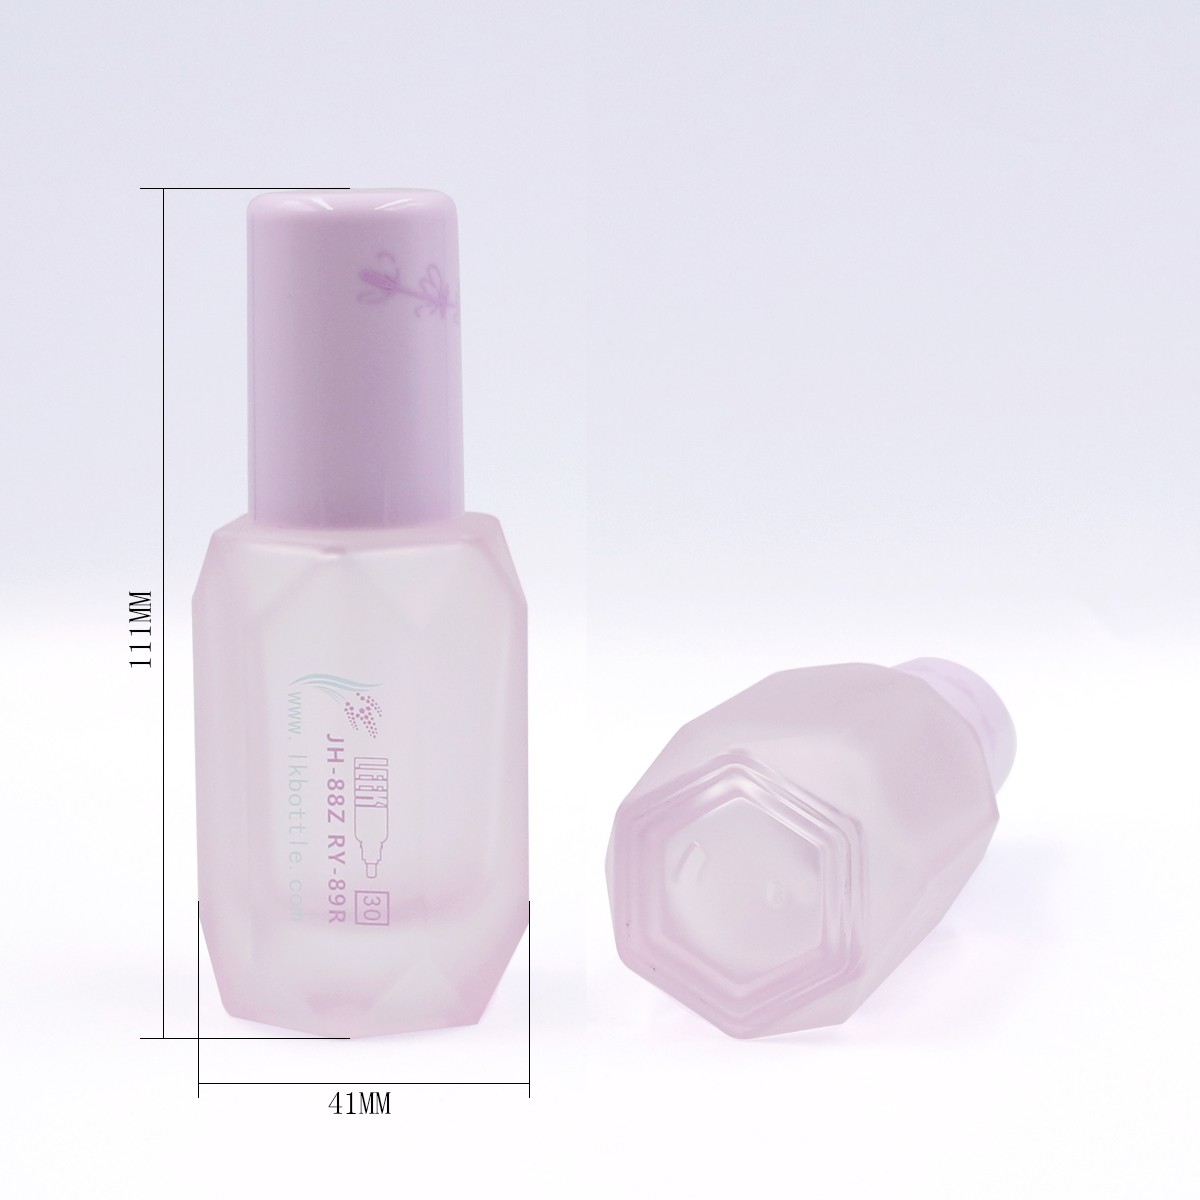 30ml diamond-like luxury glass lotion essence bottles